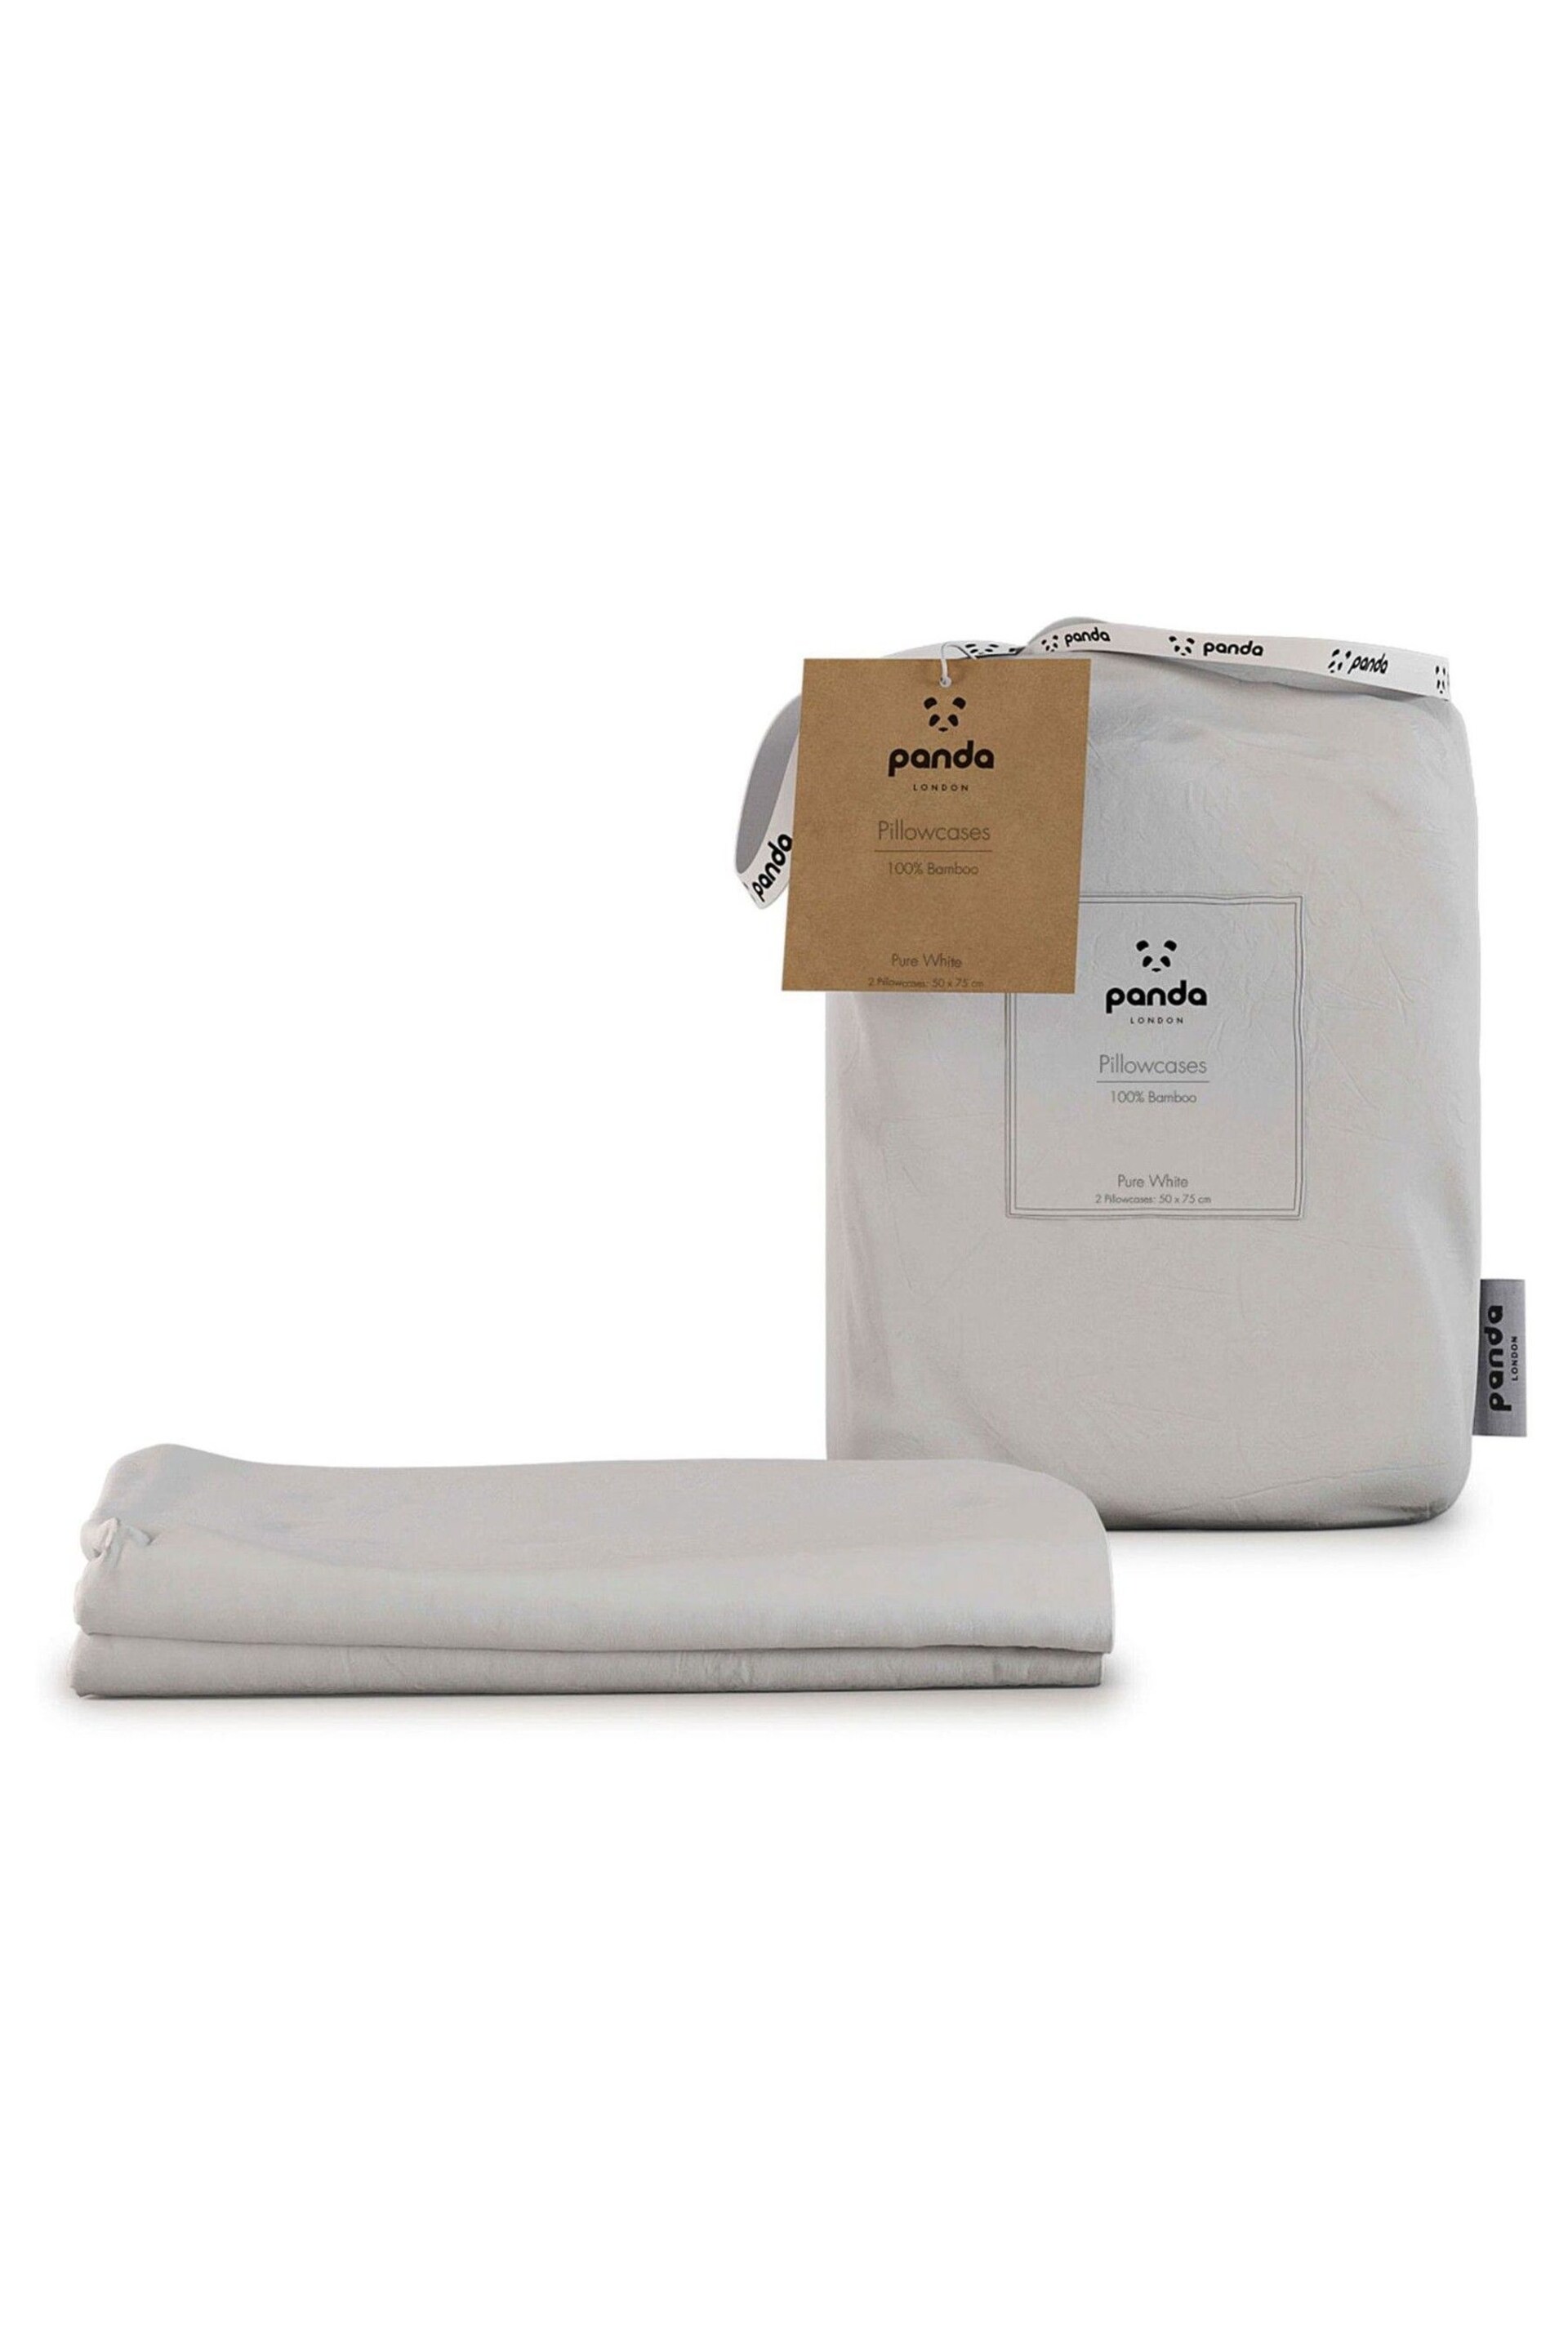 Panda London White Bamboo Pillowcases - Pack of 2 - Image 3 of 6